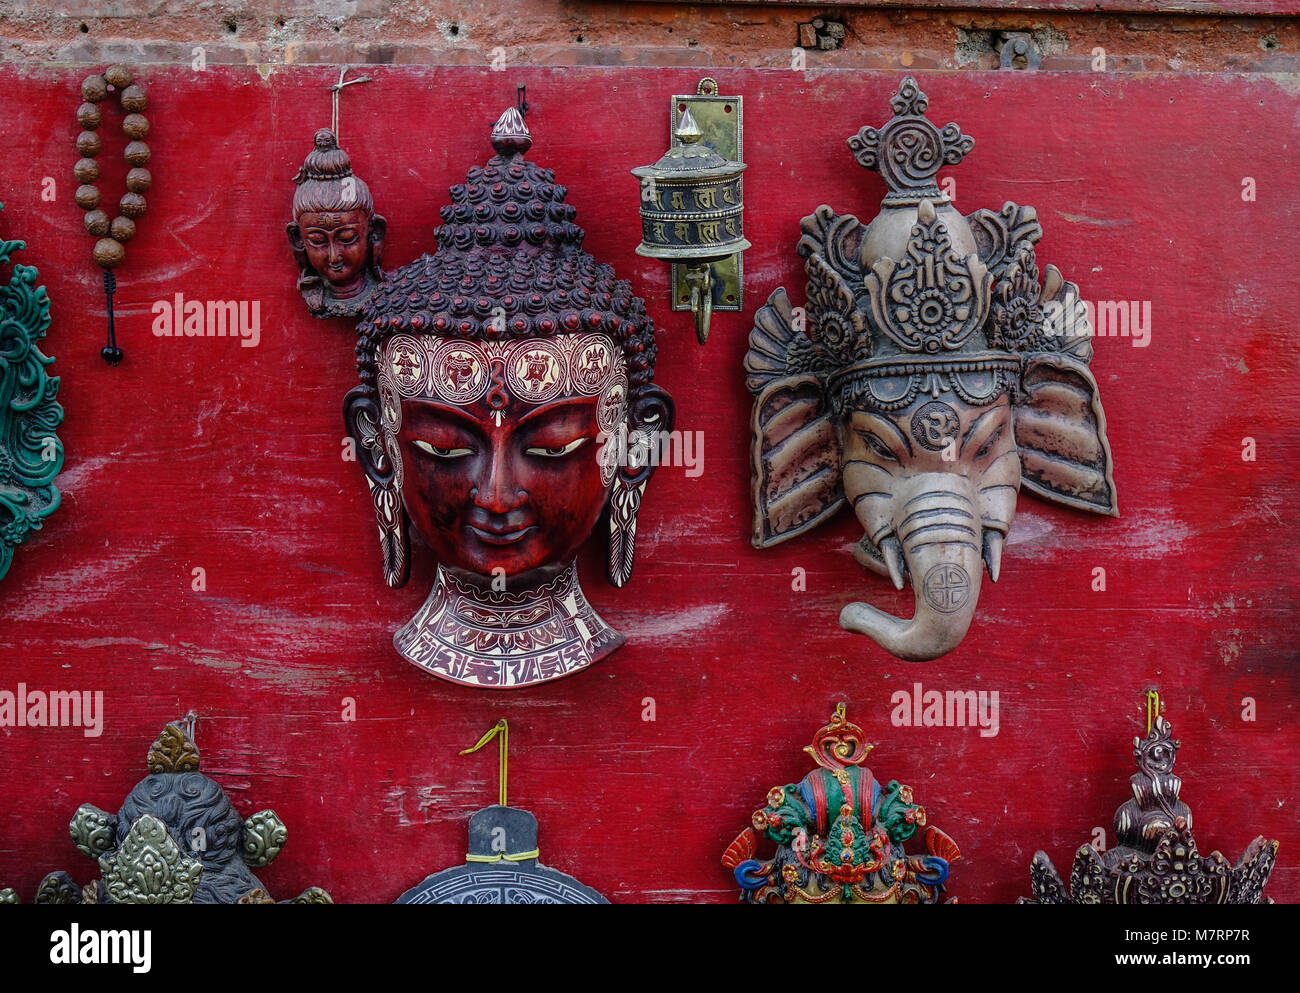 Buddhist Temple In Kathmandu Nepal Stock Photos & Buddhist Temple In ...